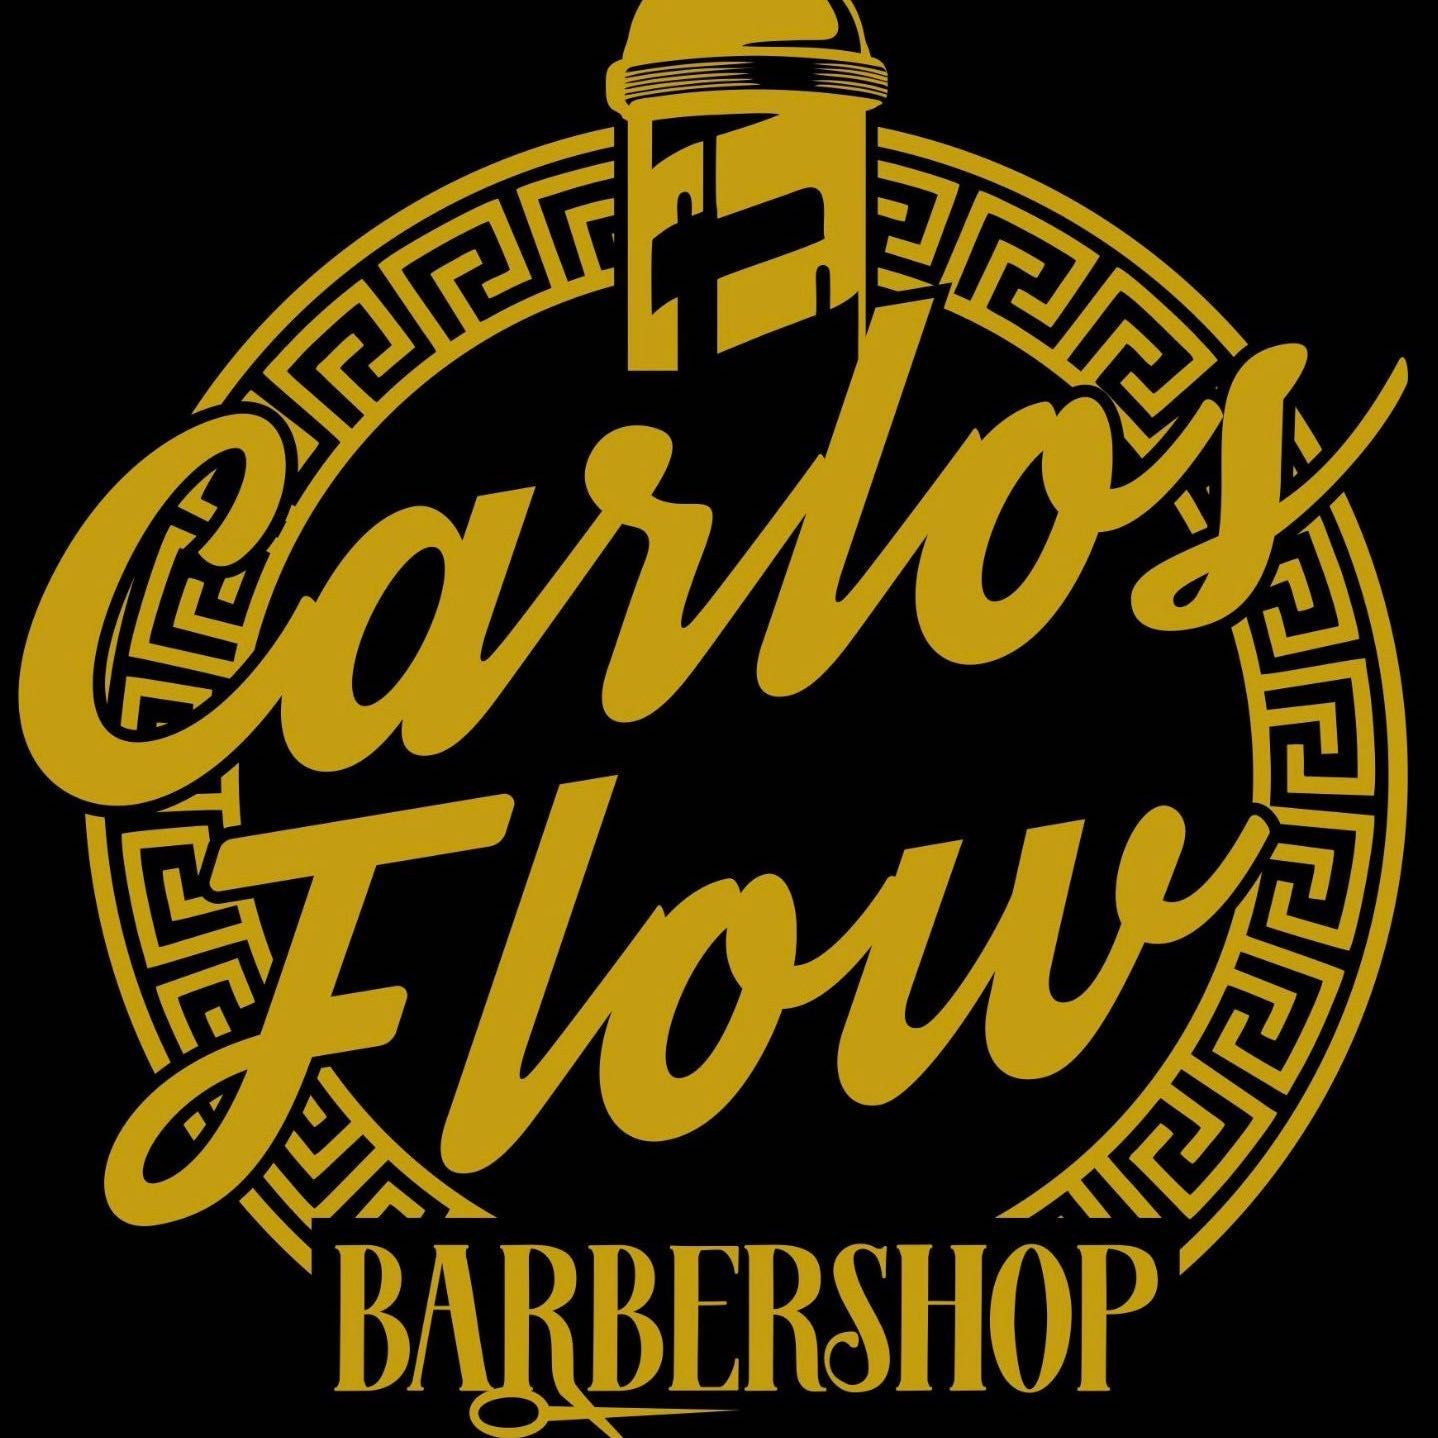 carlosflowbarbershop, Rúa Capitán Juan Varela 23, bajo, 15007, A Coruña